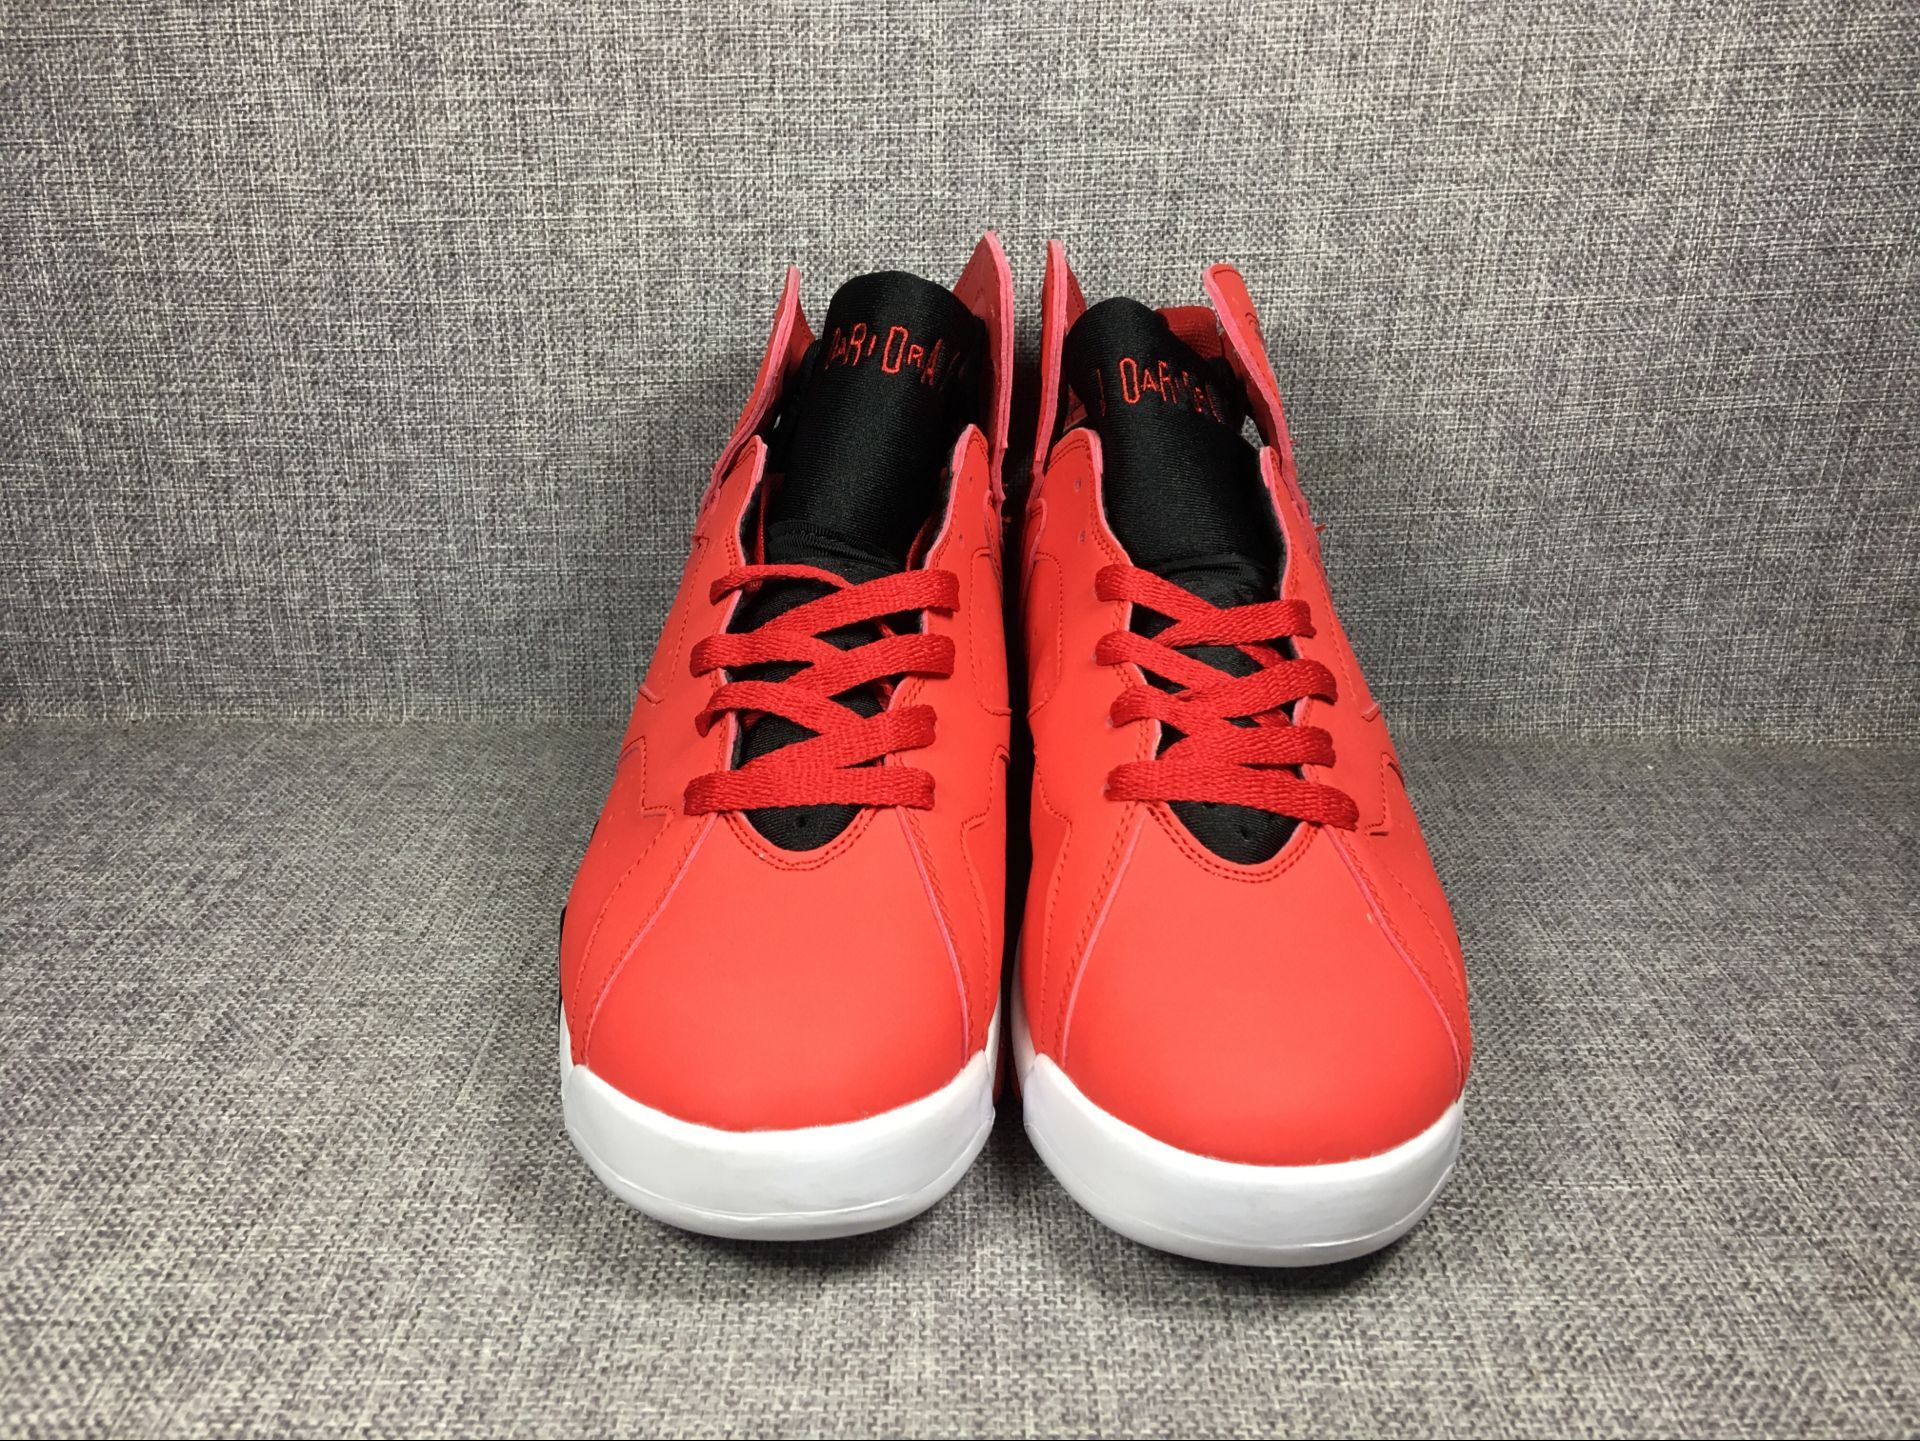 New Air Jordan 7 Retro Red Black White Shoes